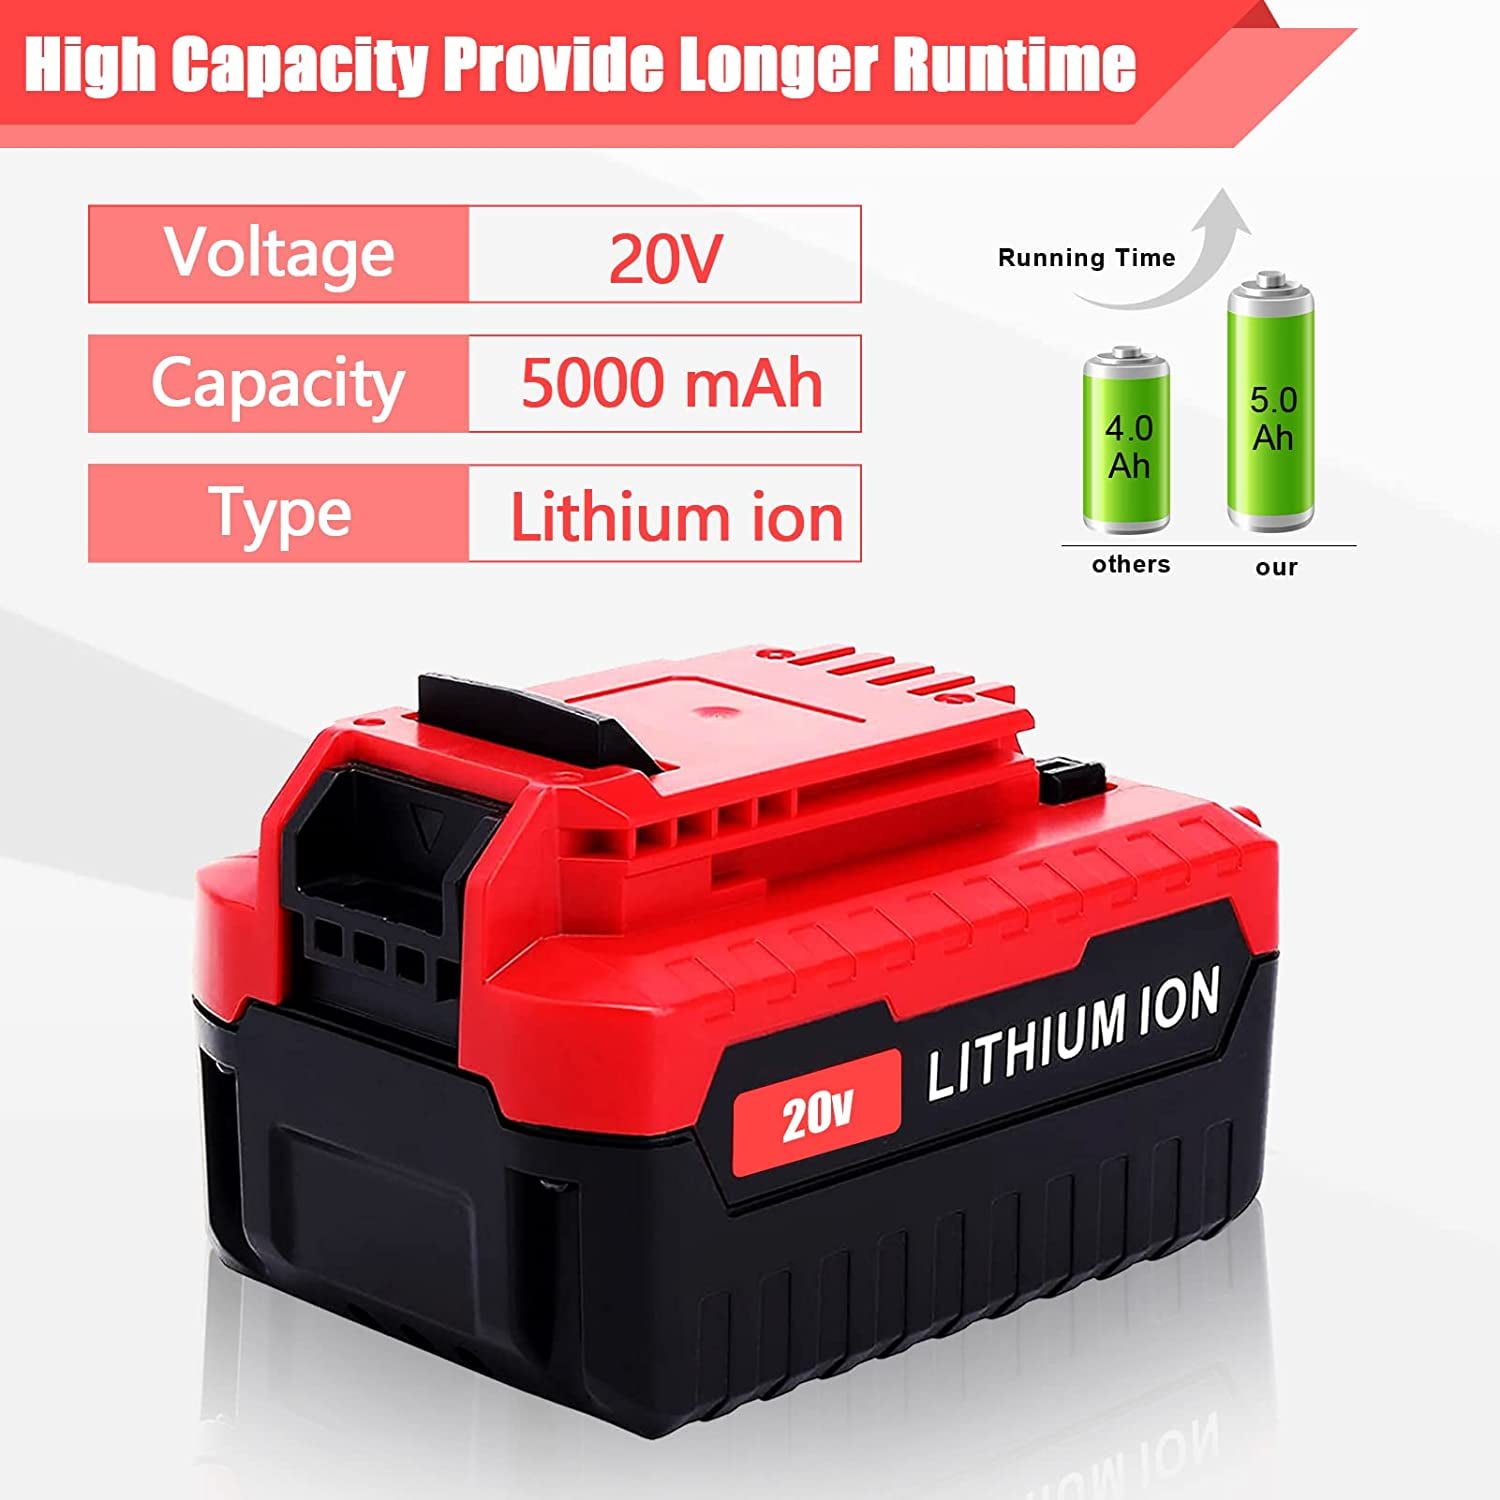 Fancy Buying CO. 20v max lithium battery charger for porter cable pcc685l  pcc685lp pcc680l pcc692l pcc691l